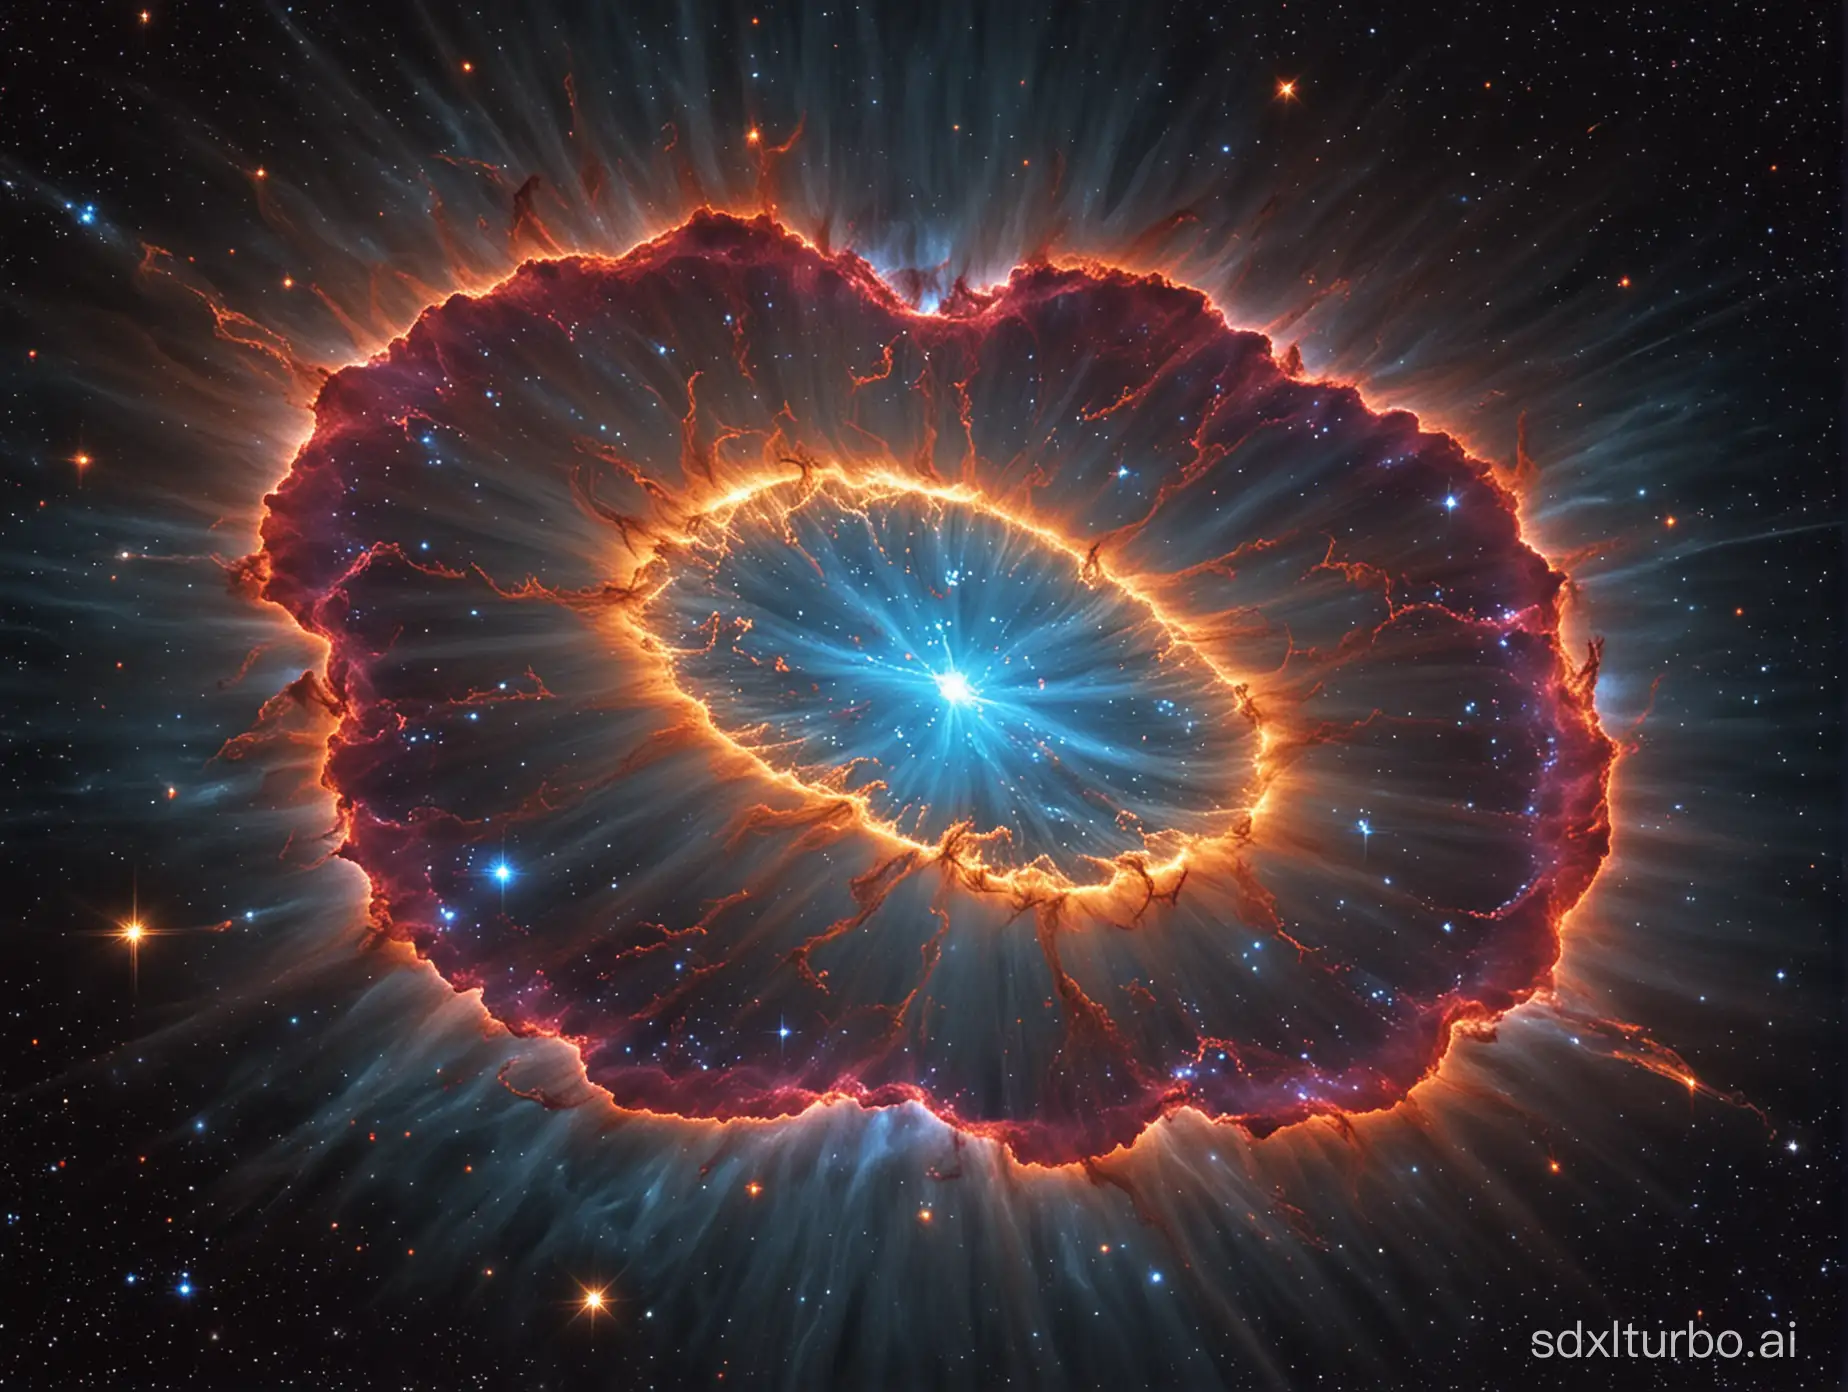 Vibrant-Supernova-Explosion-Illuminating-Cosmic-Sky